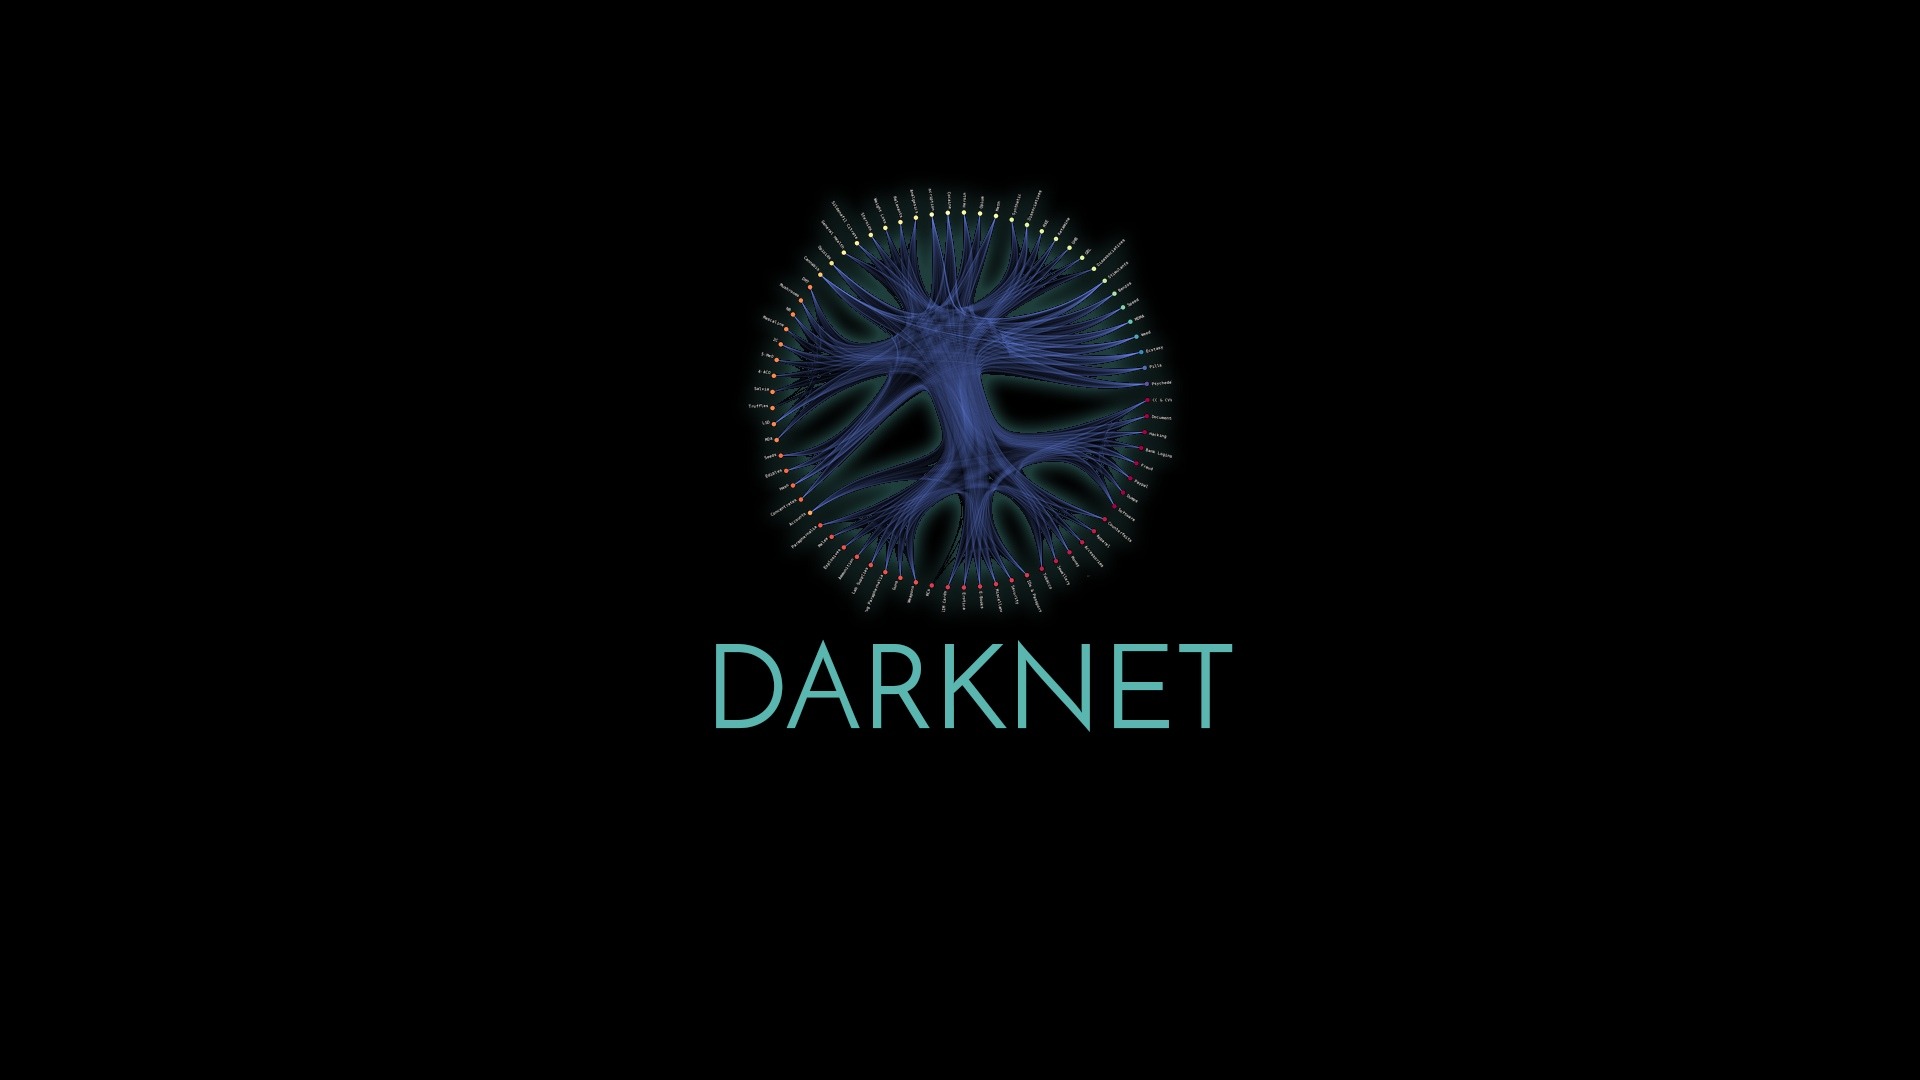 Dark net tor kraken darknet download даркнет